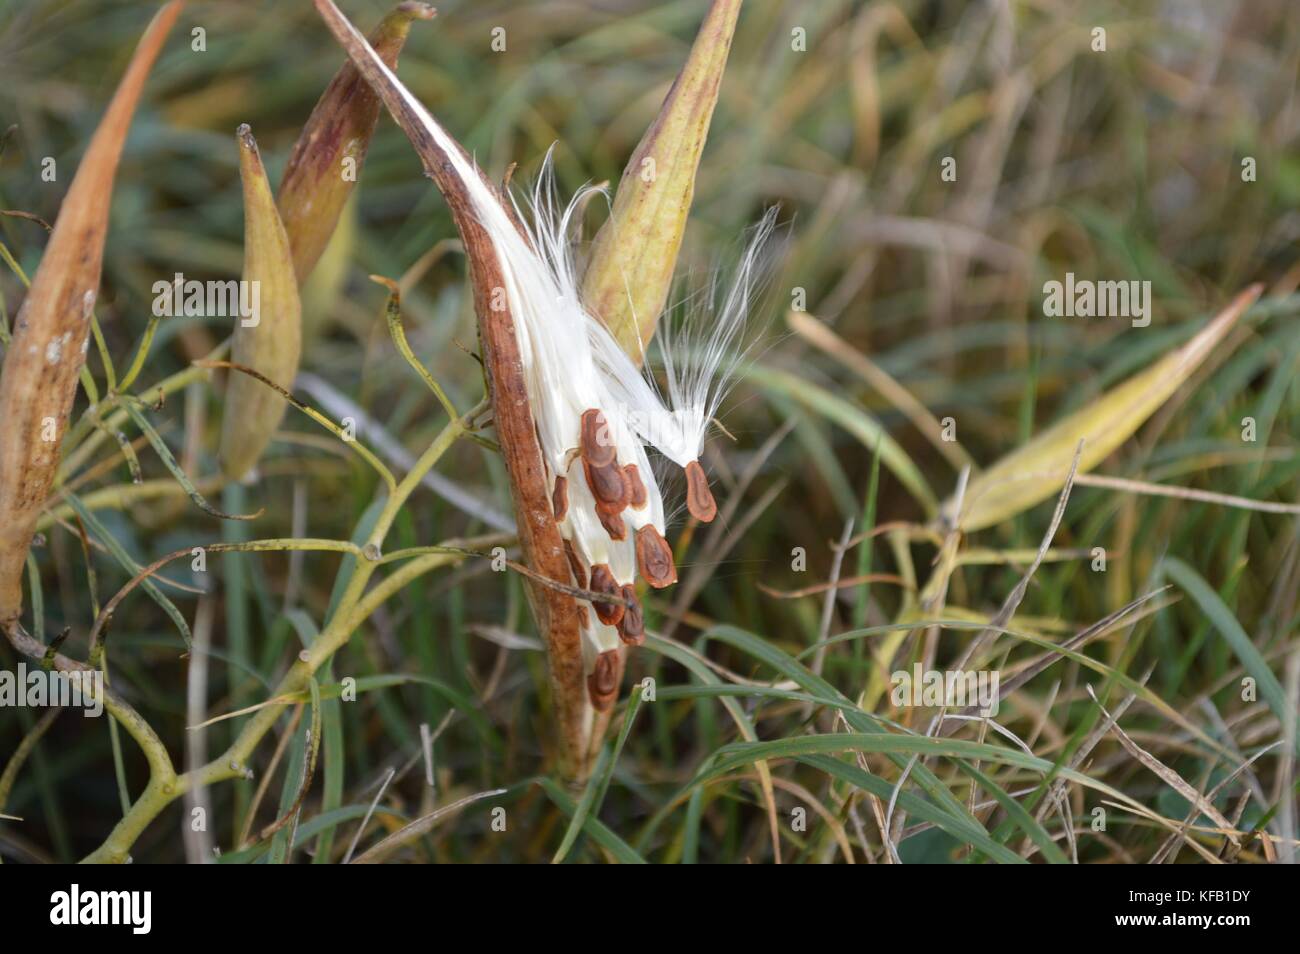 Swamp milkweed Anlage macht seine milkweed Samenkapseln im Madison wetland Management District 19. Oktober 2016 in South Dakota. (Foto von Kate miyamoto über planetpix) Stockfoto